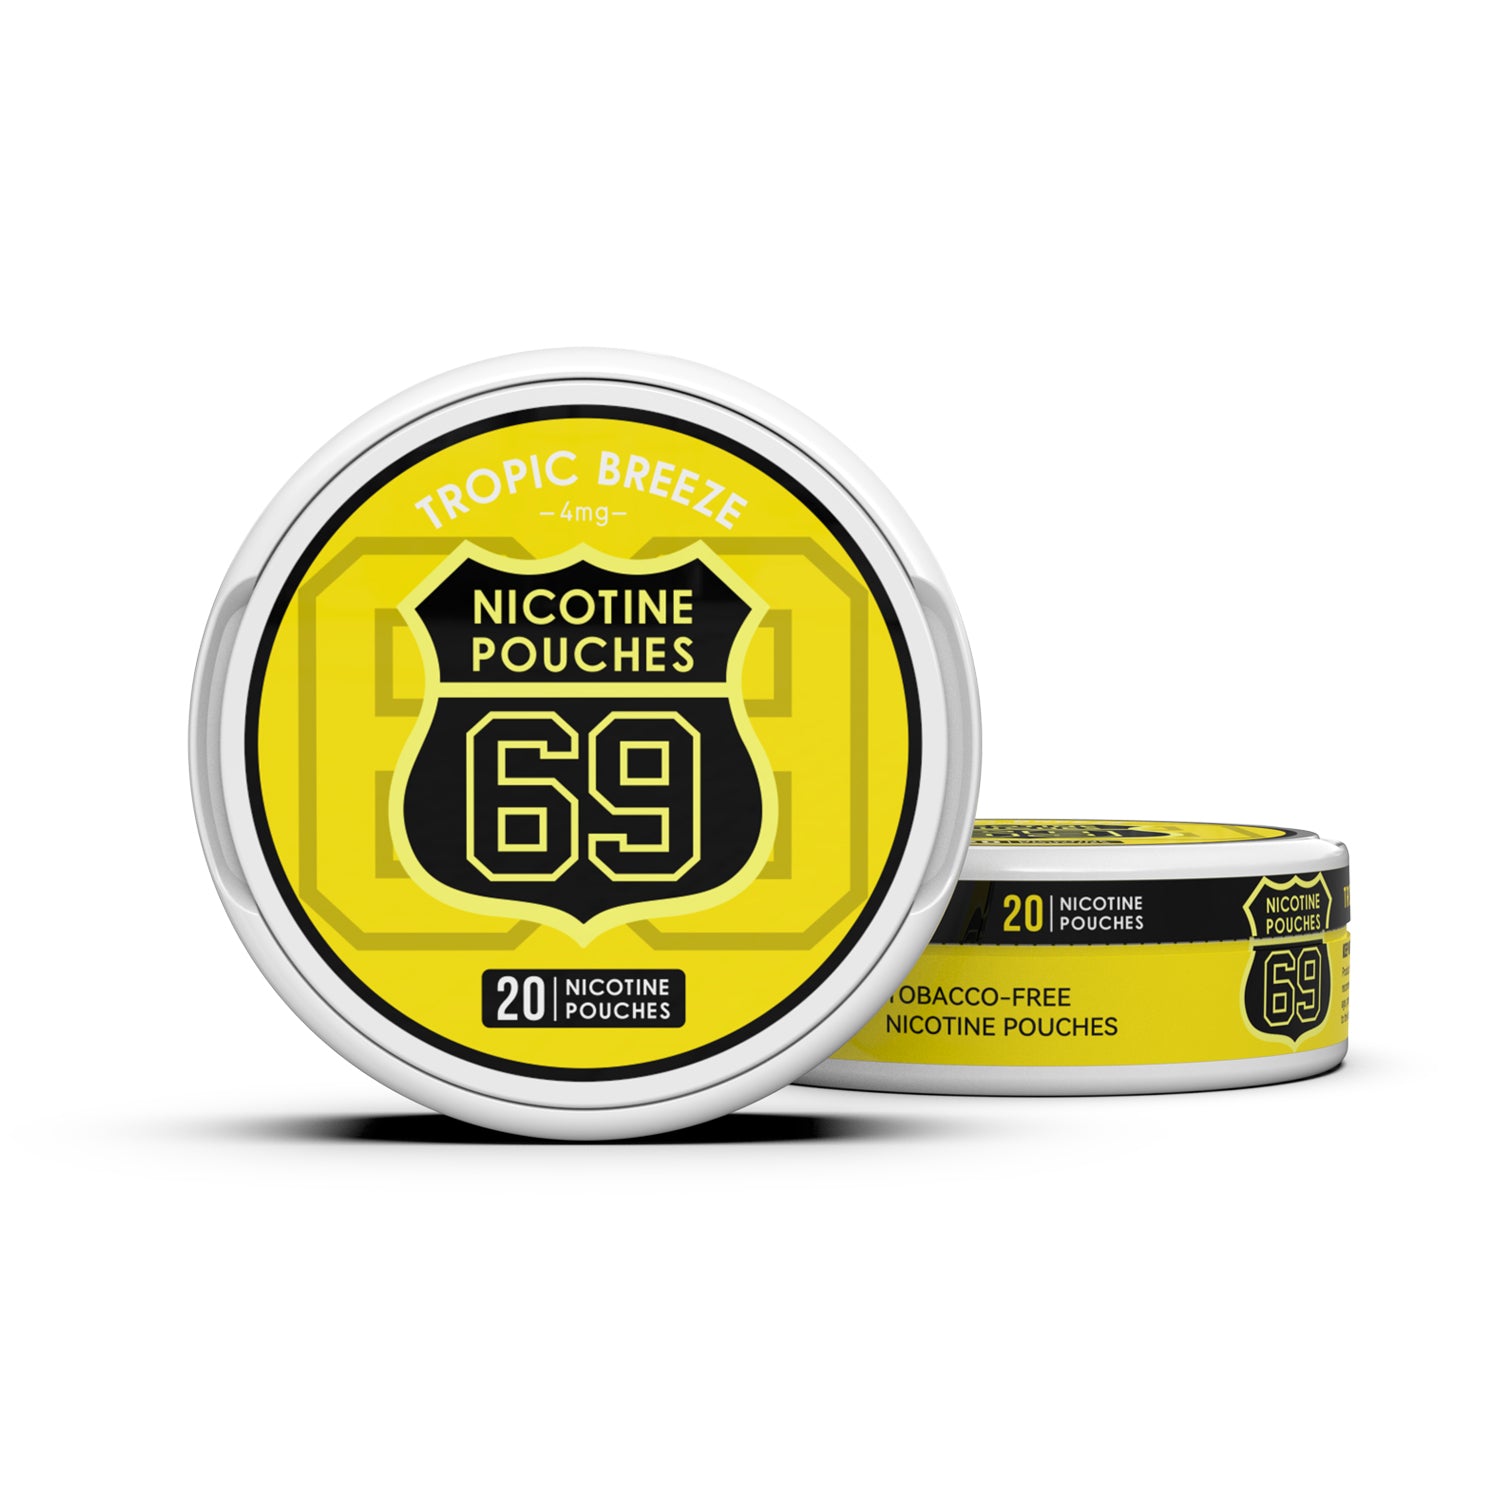 69 Nicotine Pouches 4mg Tobacco-Free Slim 20pcs /can